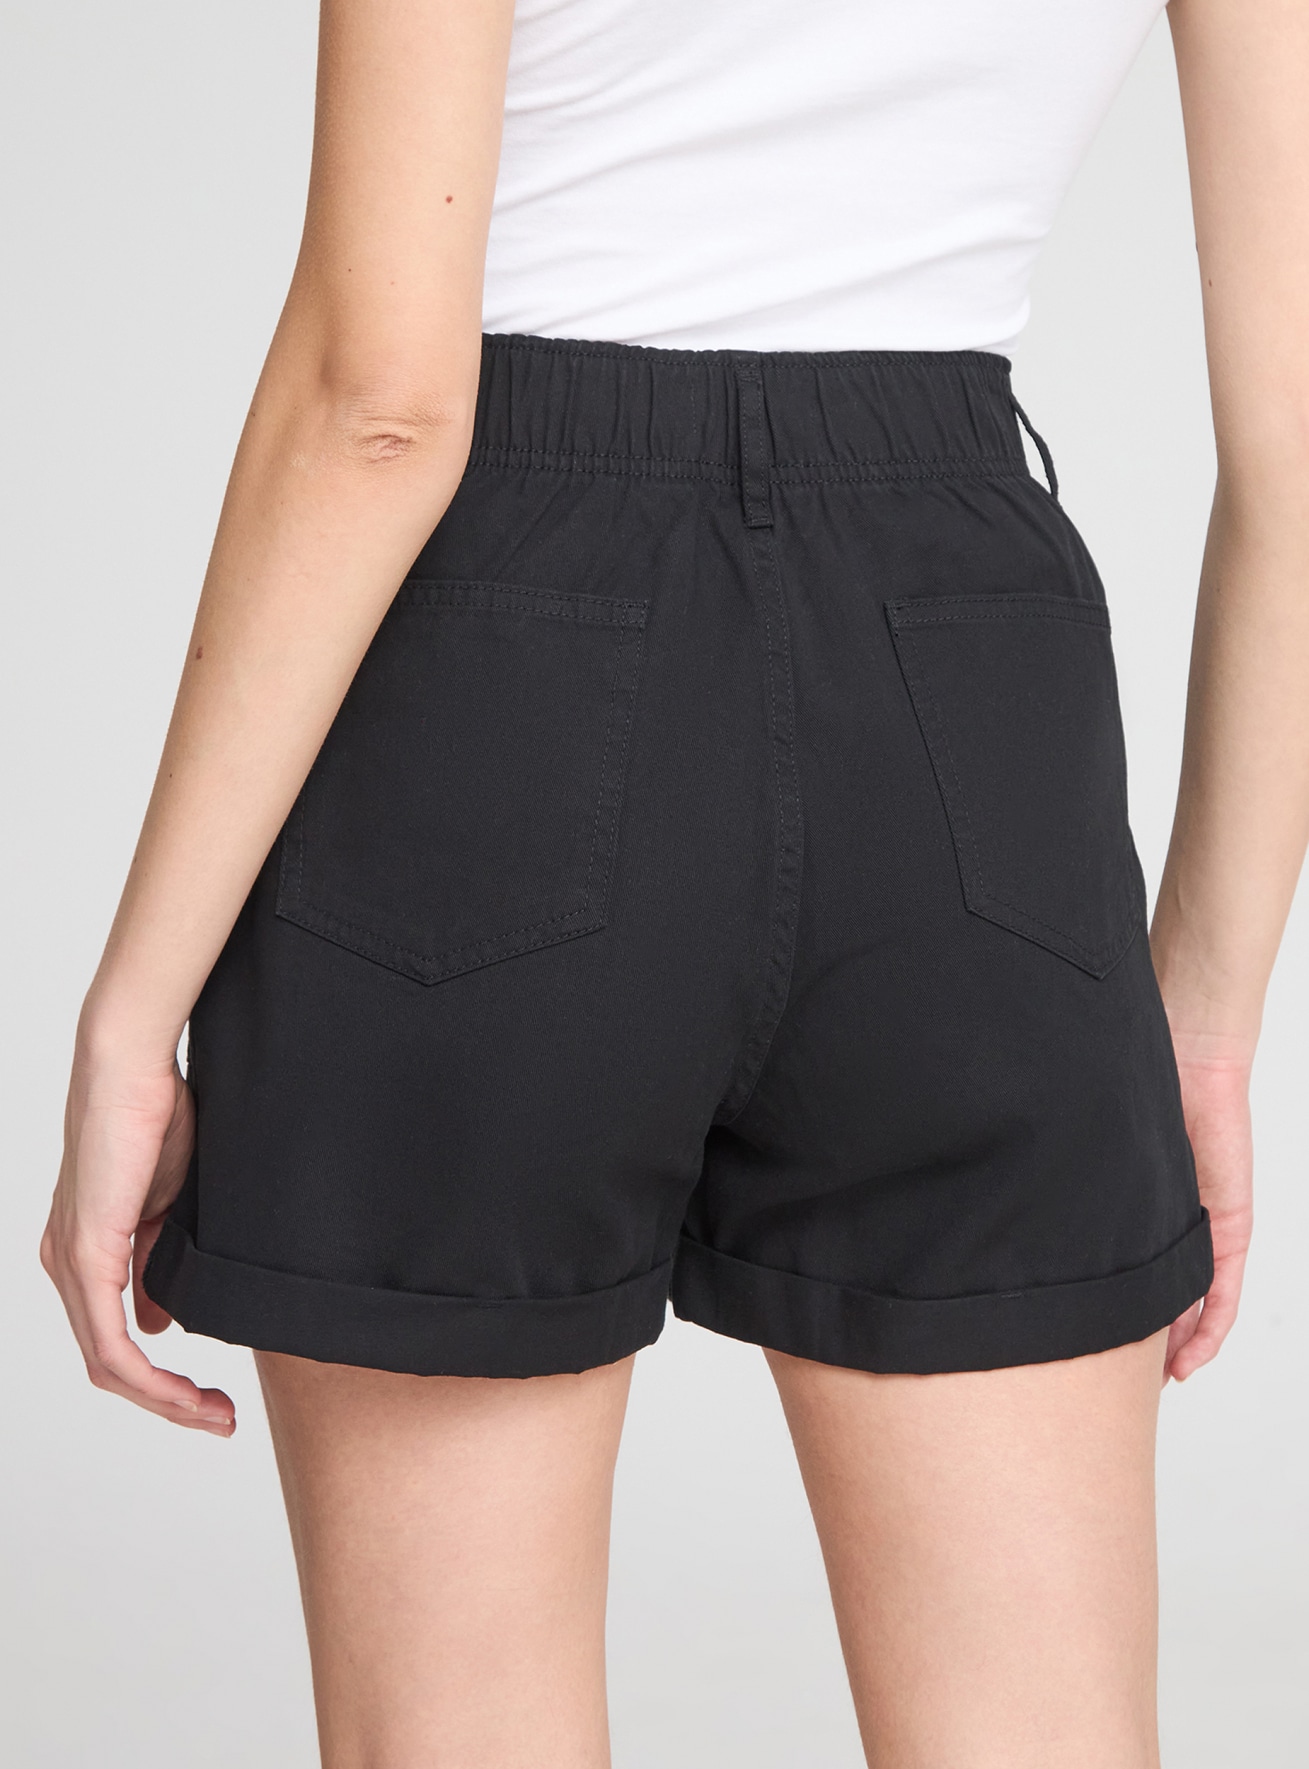 Pantalones cortos Mujer Terranova